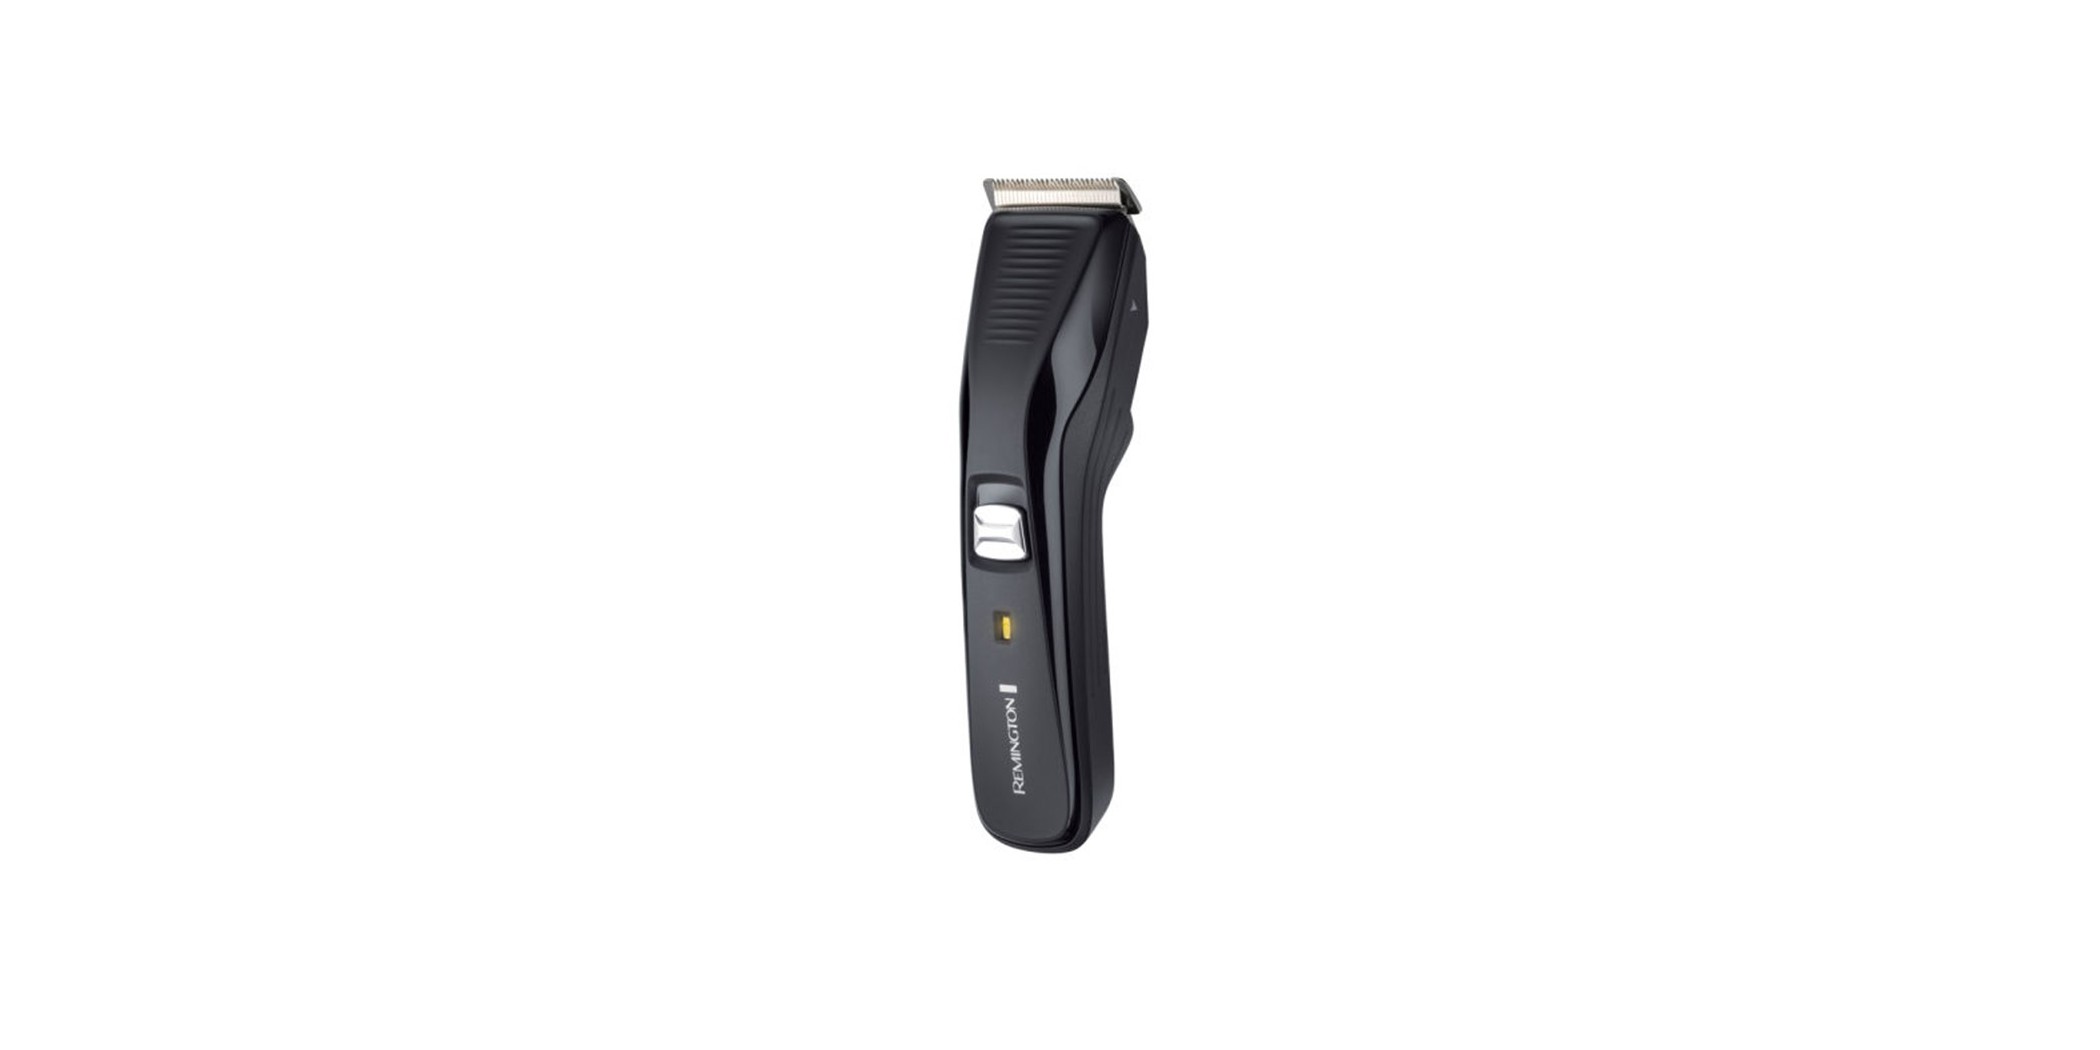 Remington HC5200 Pro Power Hair Clipper